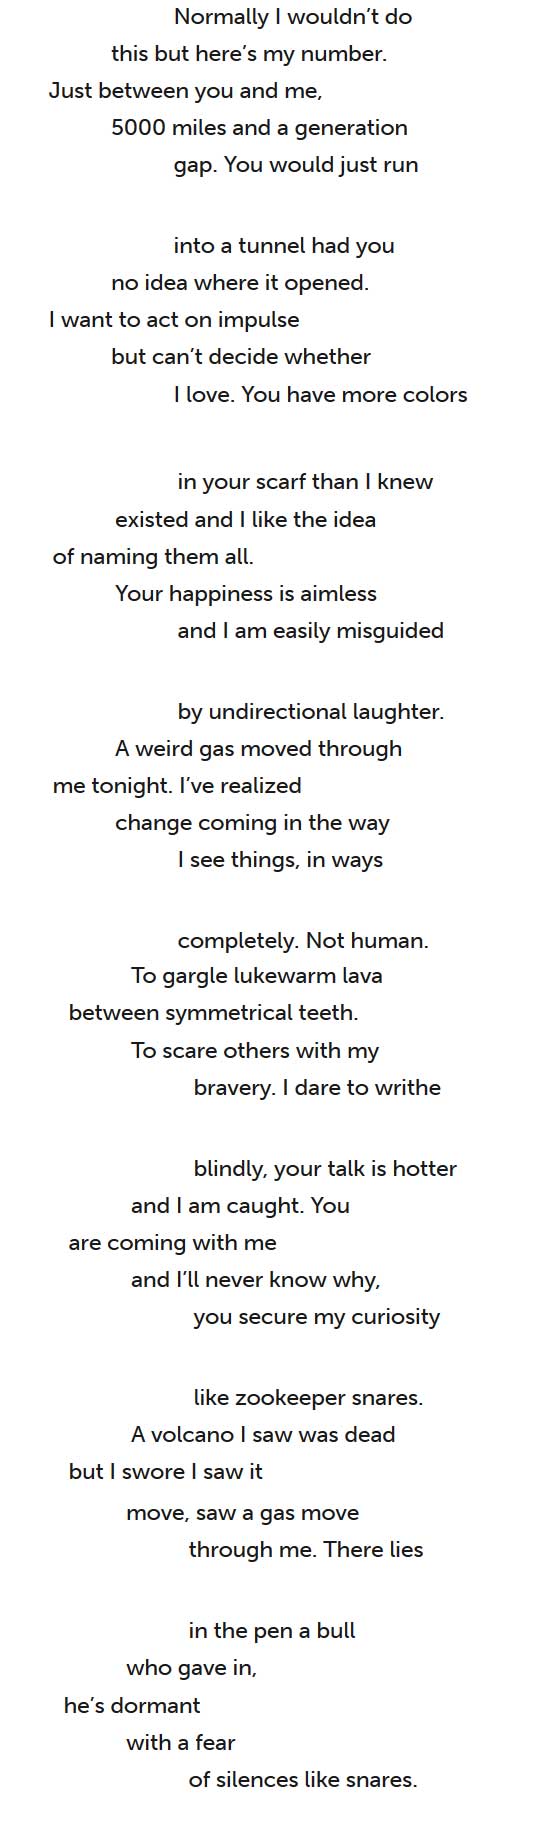 AJ Urquidi Follower poem copyright 2015